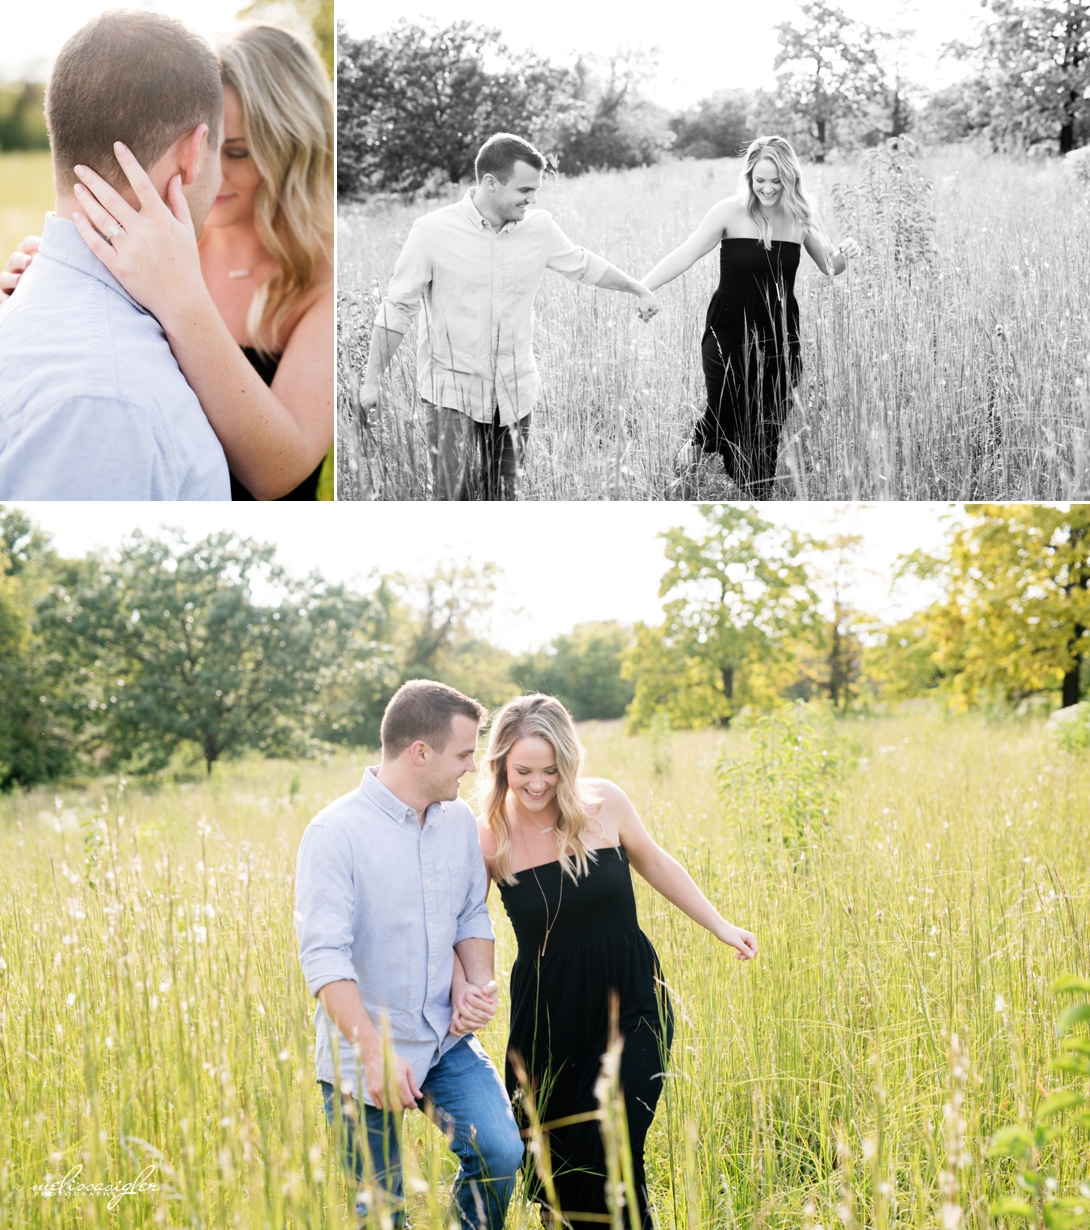 Engagement photos at Shawnee Mission Park